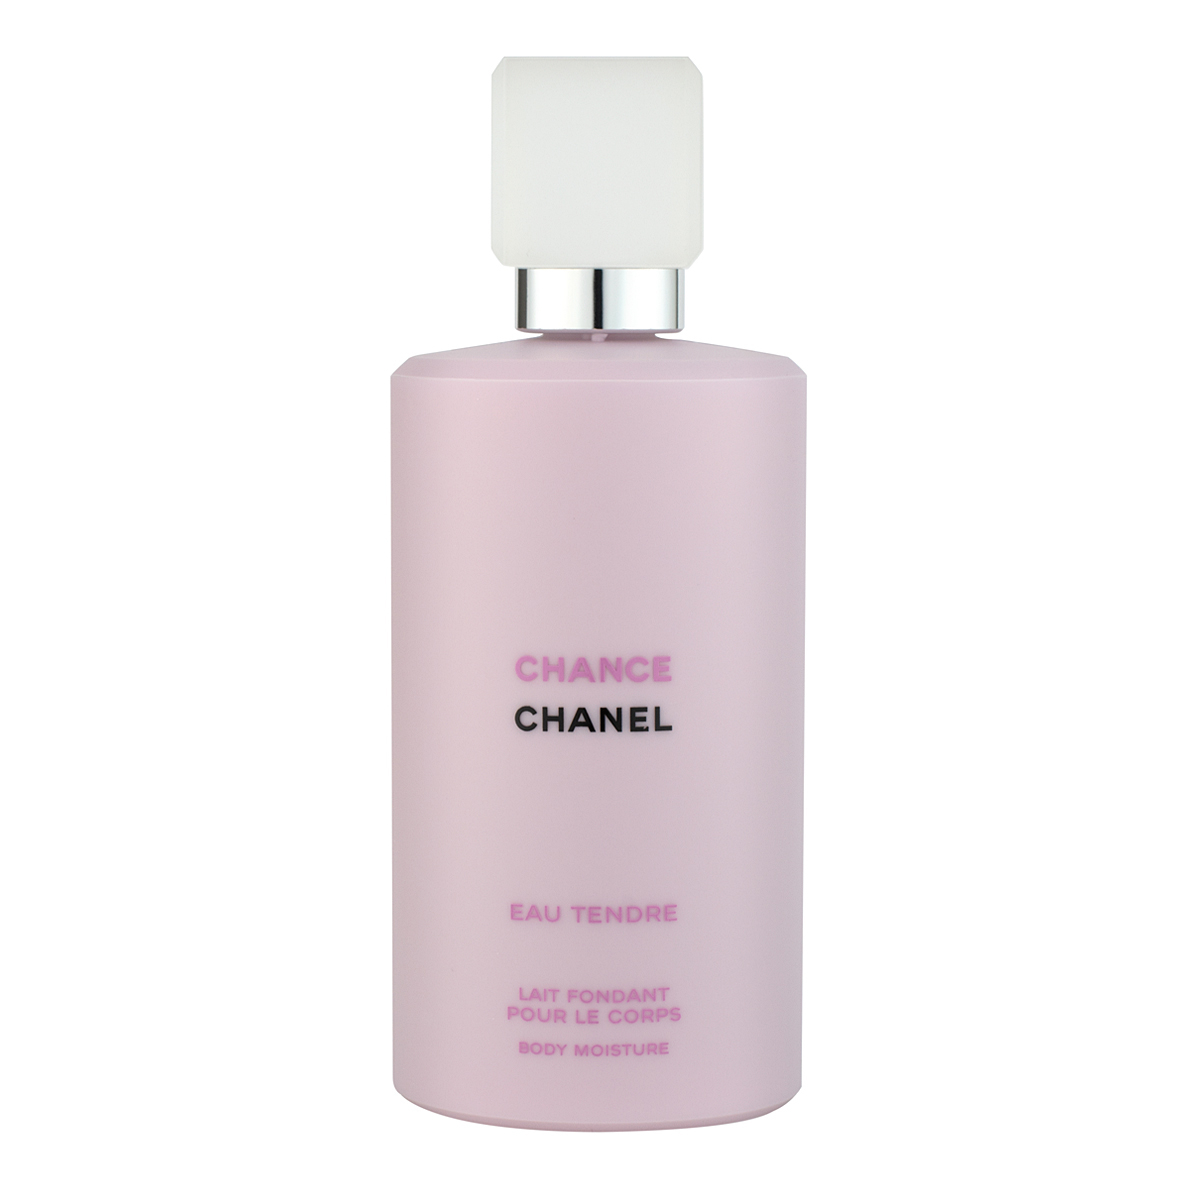 Chanel Chance Body Lotion Debenhams Flash Sales, 60% OFF 